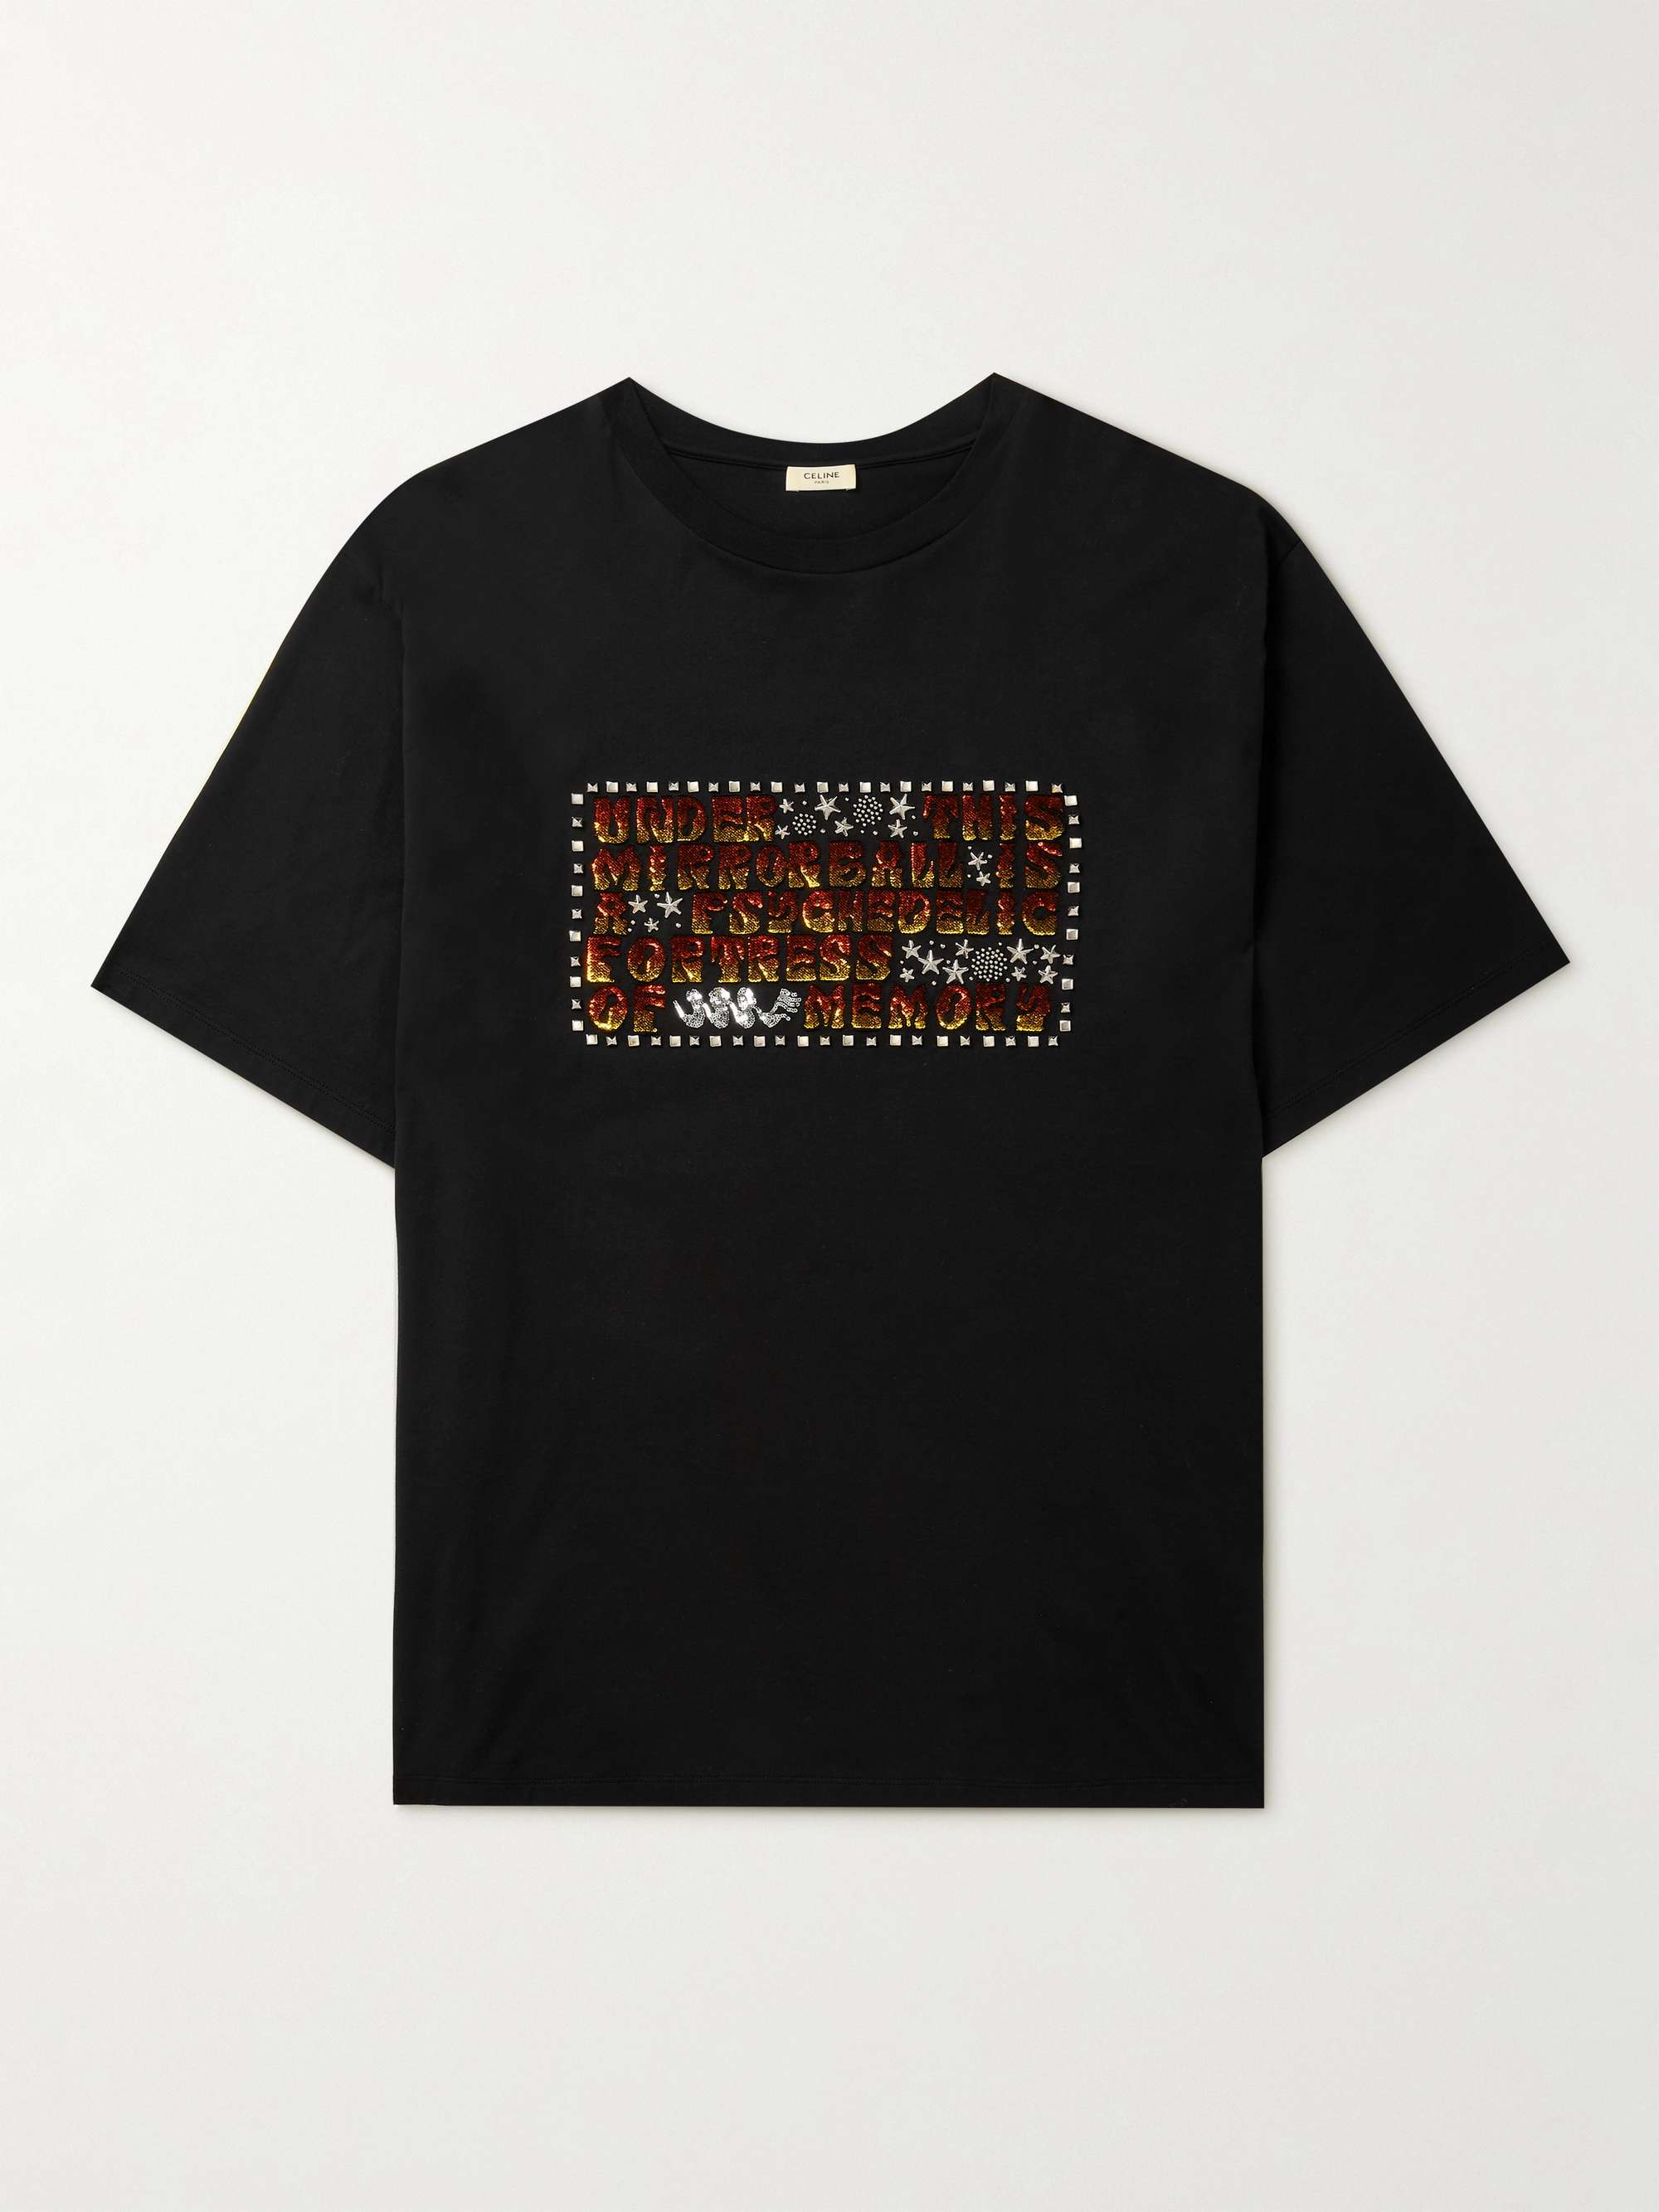 CELINE HOMME Embellished Embroidered Cotton-Jersey T-Shirt